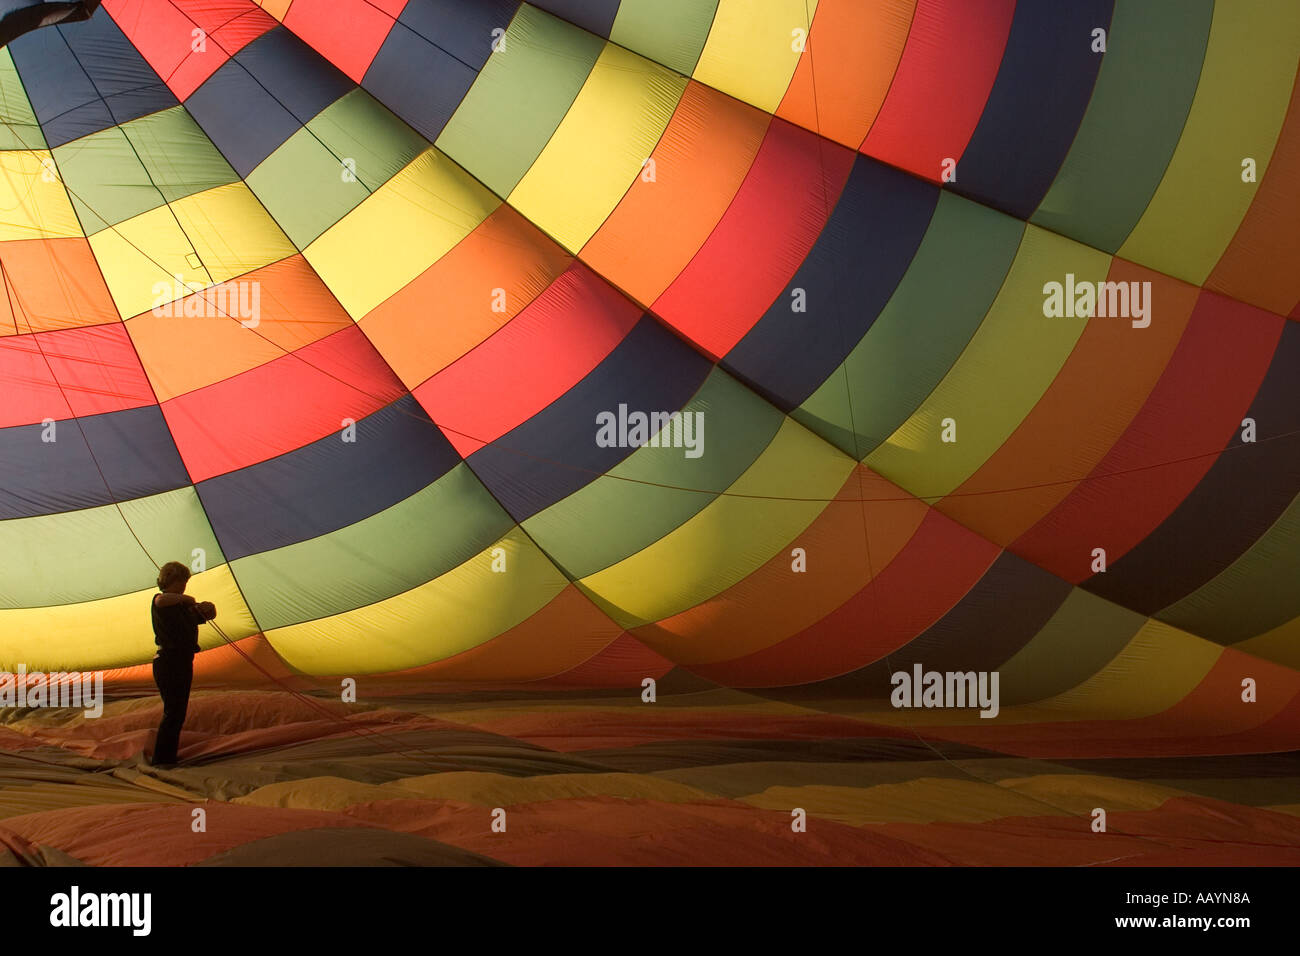 Inside air balloon Stock Photo